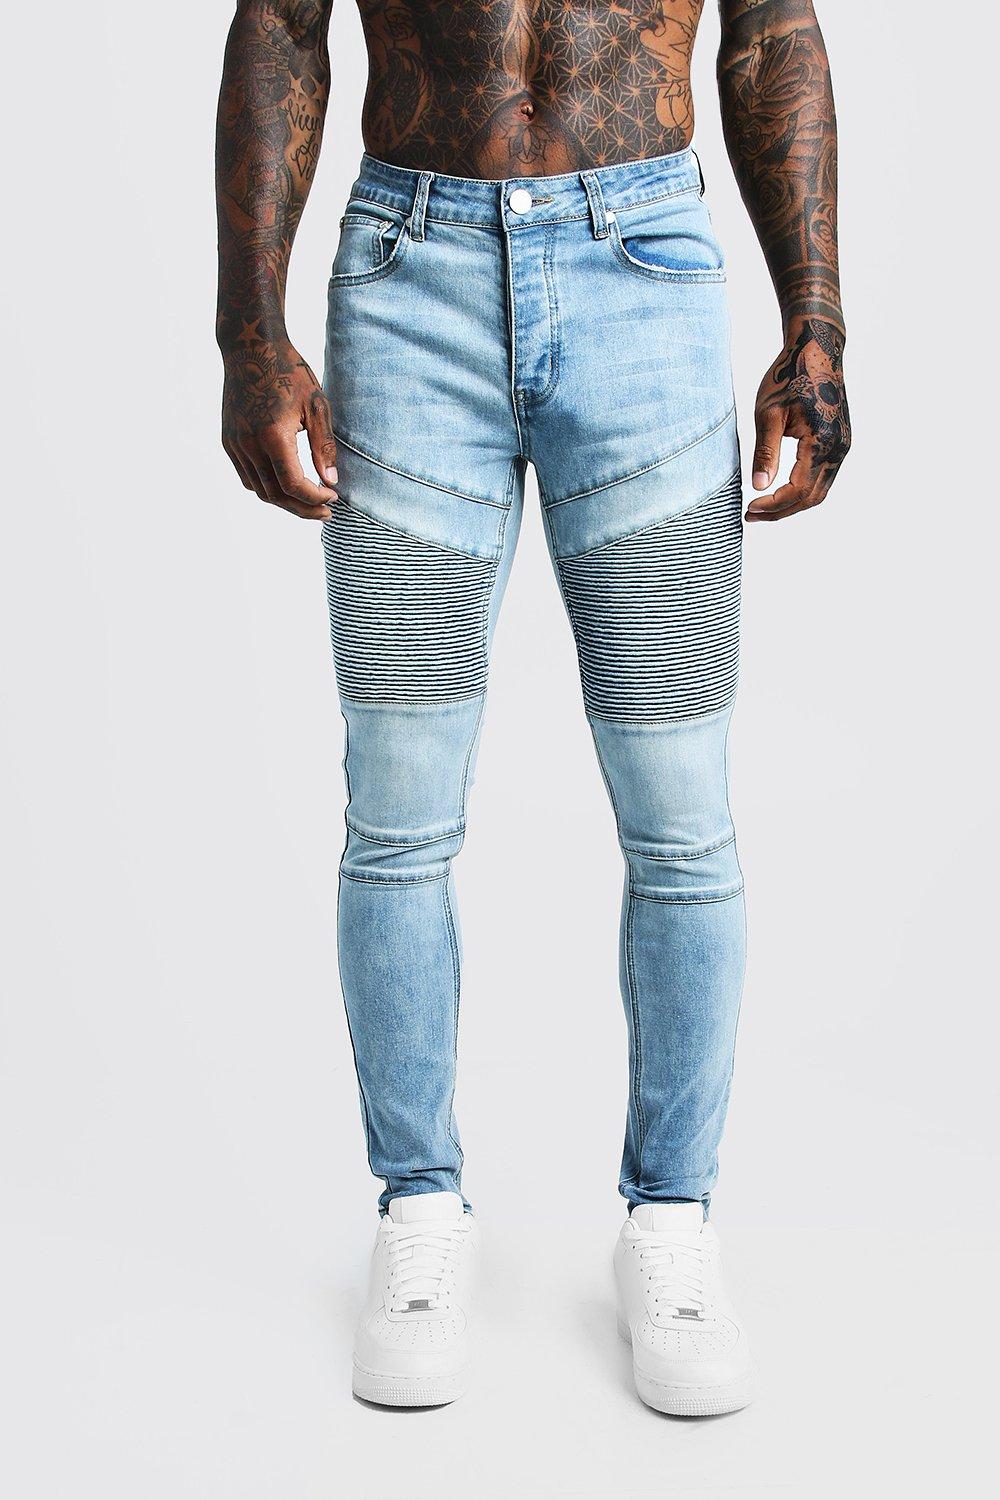 light blue biker jeans mens